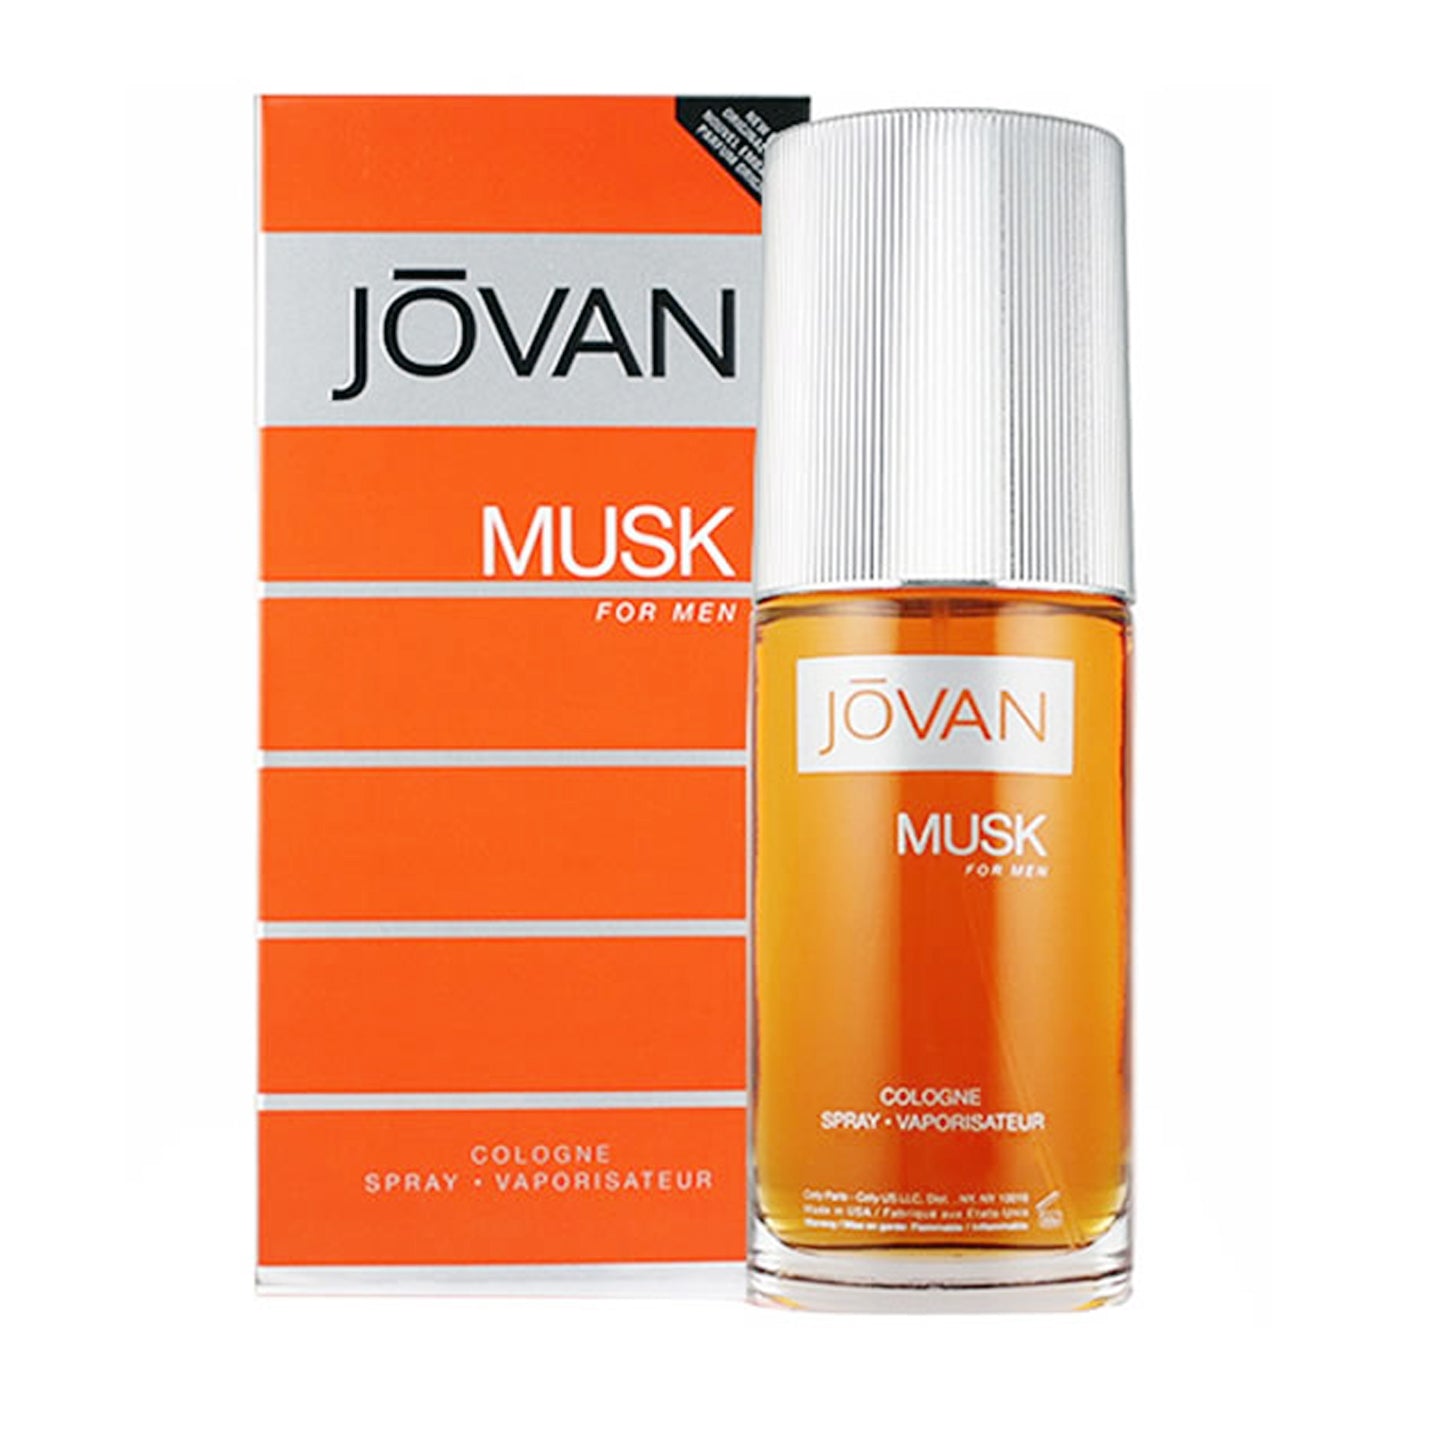 Jovan Musk Eau de Cologne Spray 90 ml for Men